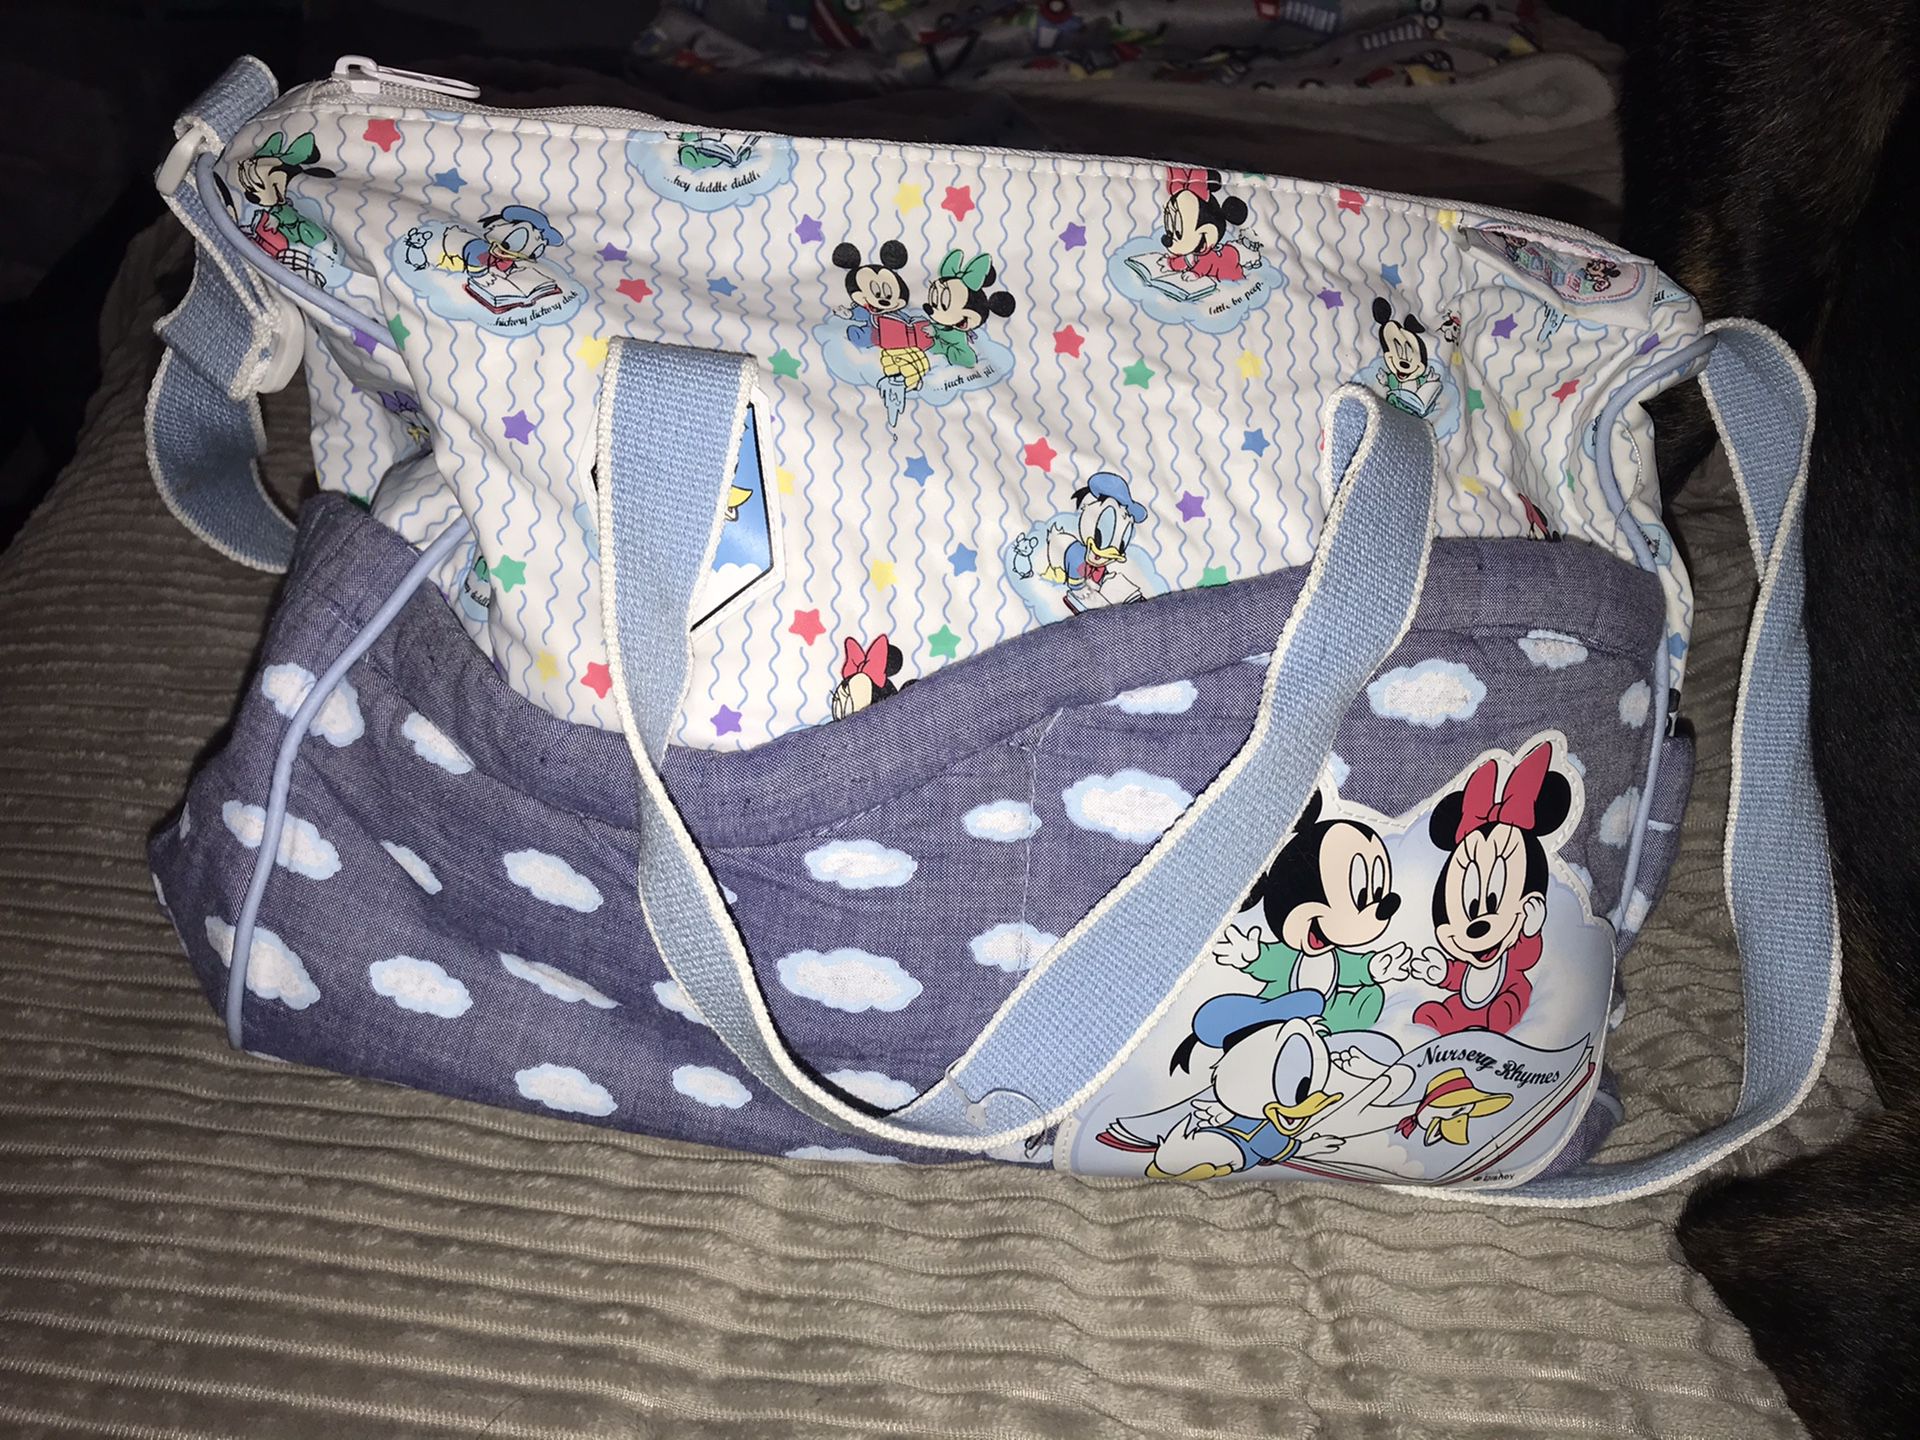 Vintage Disney diaper bag